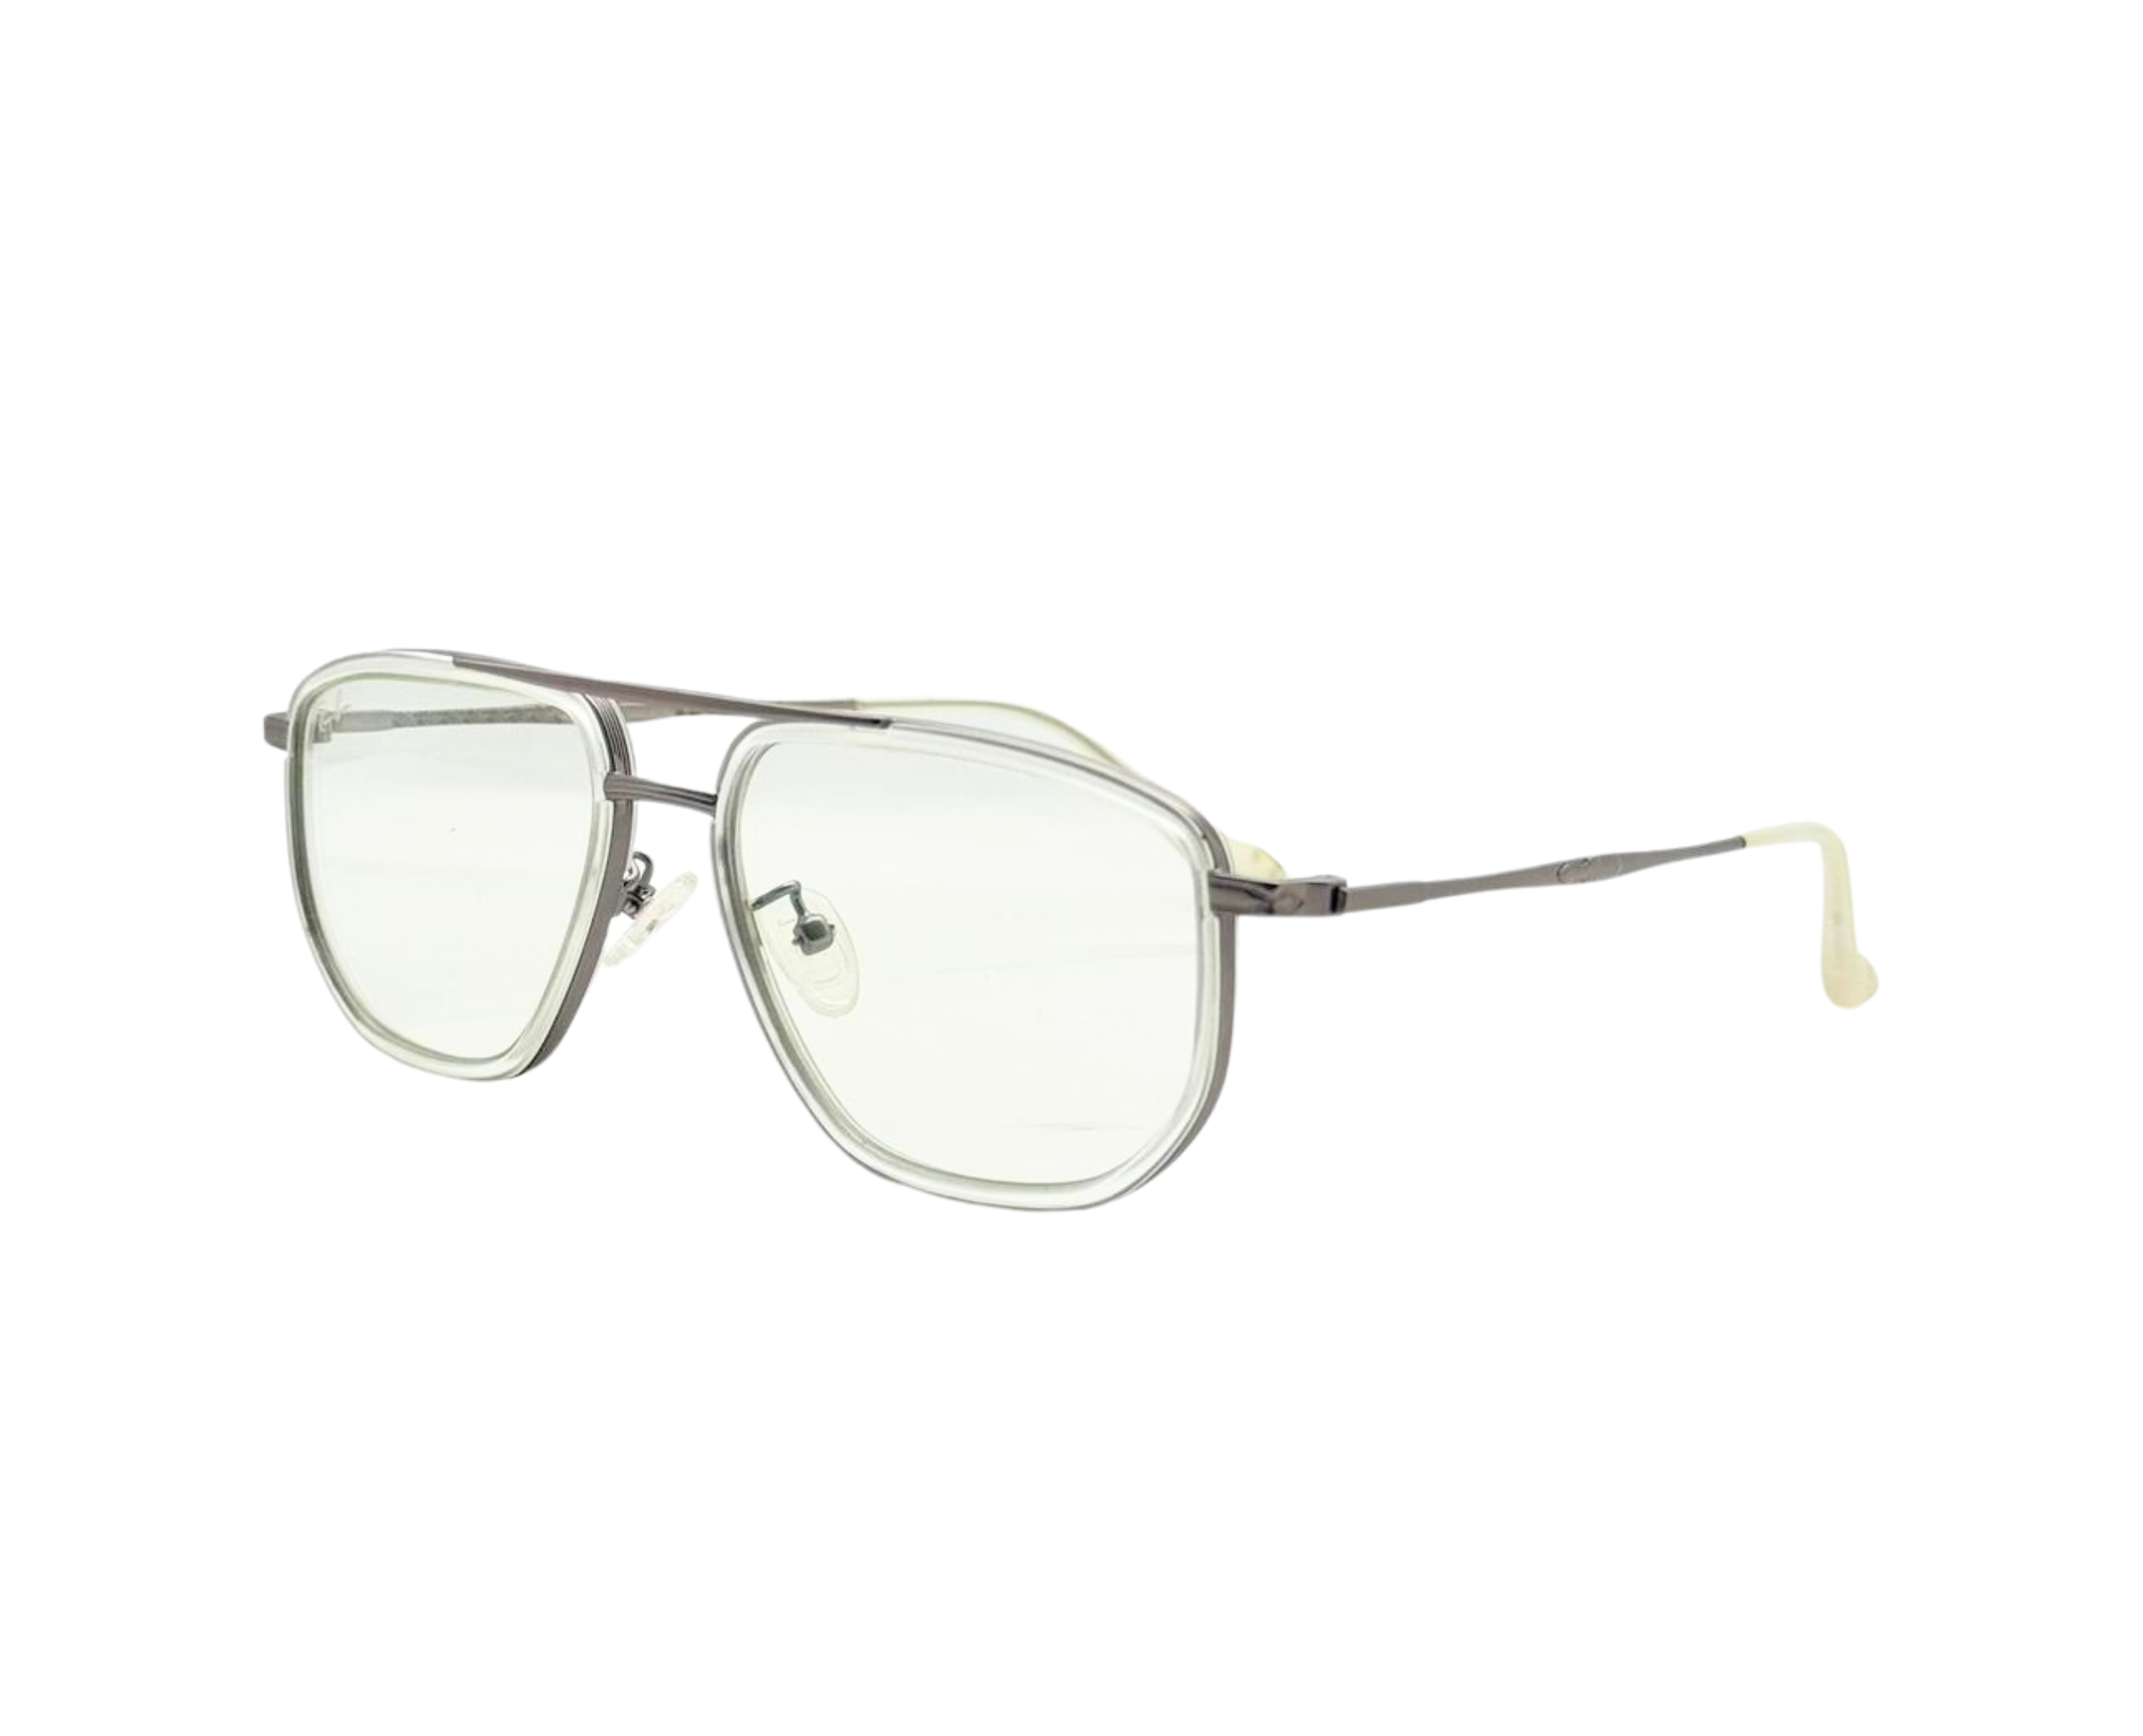 NS Deluxe - 805 - Silver - Eyeglasses